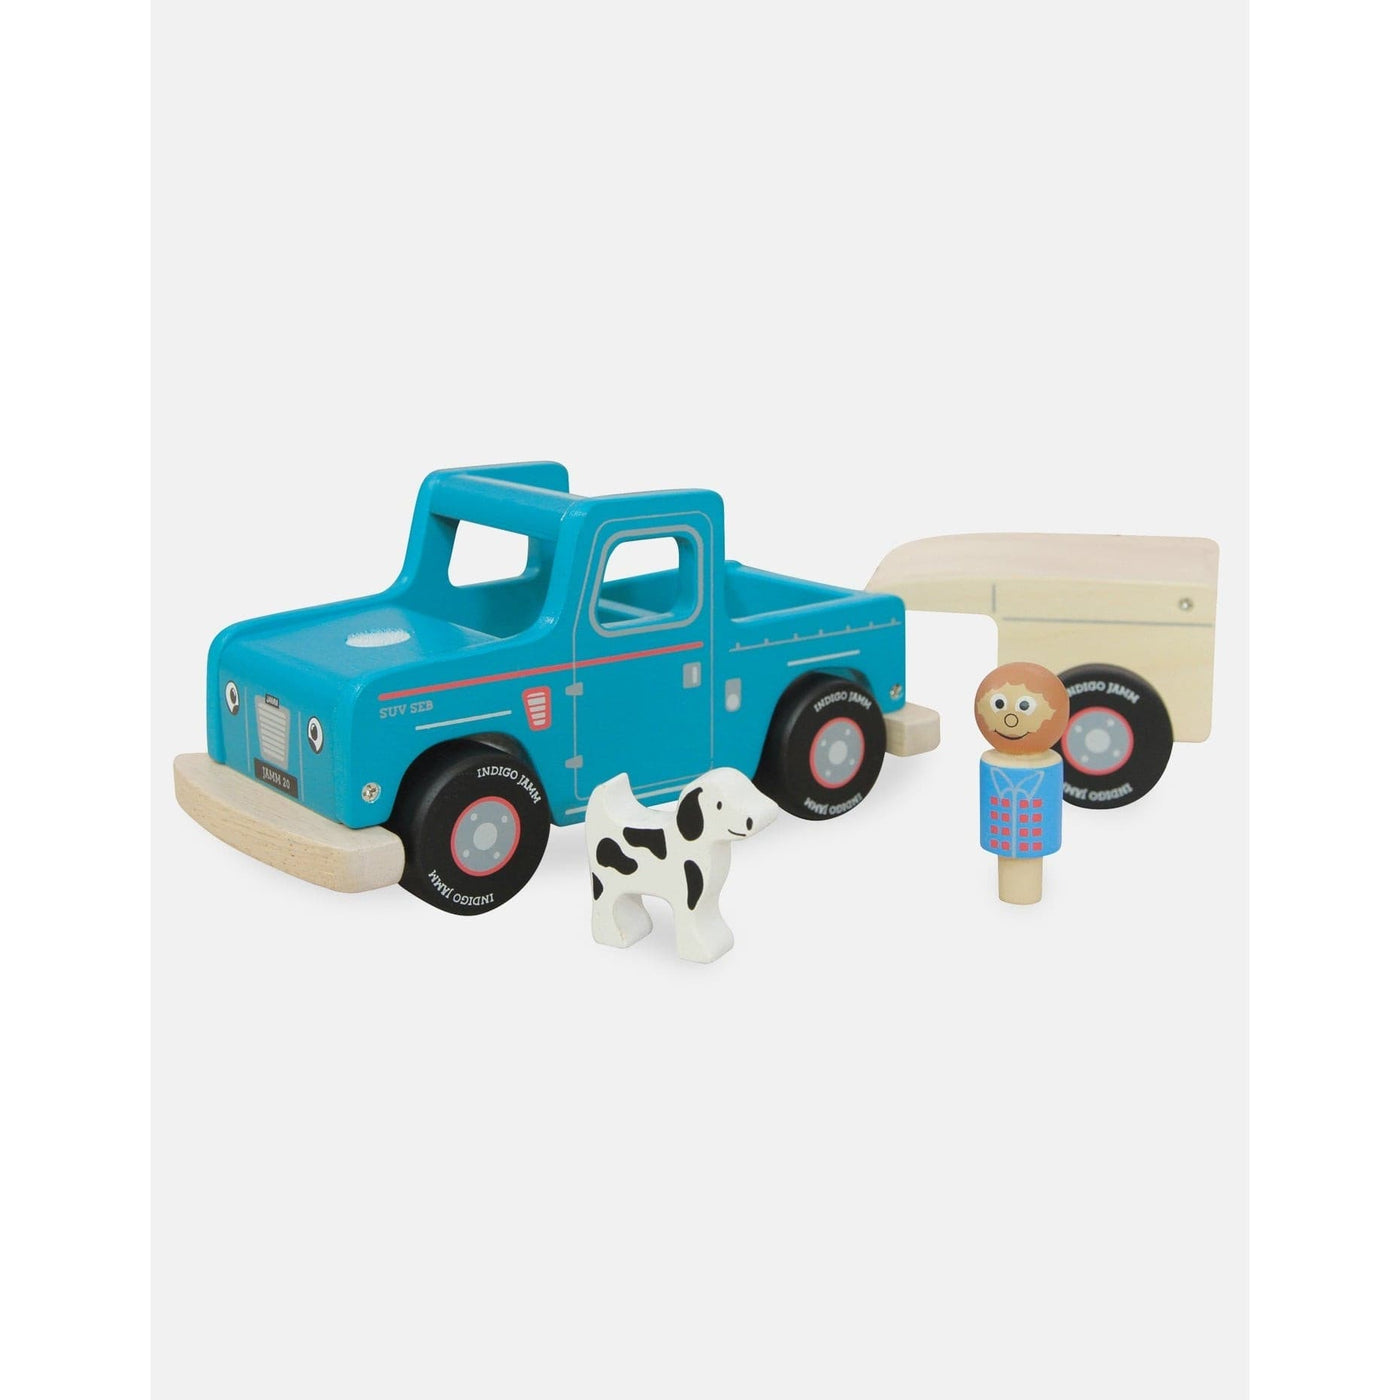 Suv Seb Farm 4X4-Toy Vehicles-Indigo Jamm-Yes Bebe